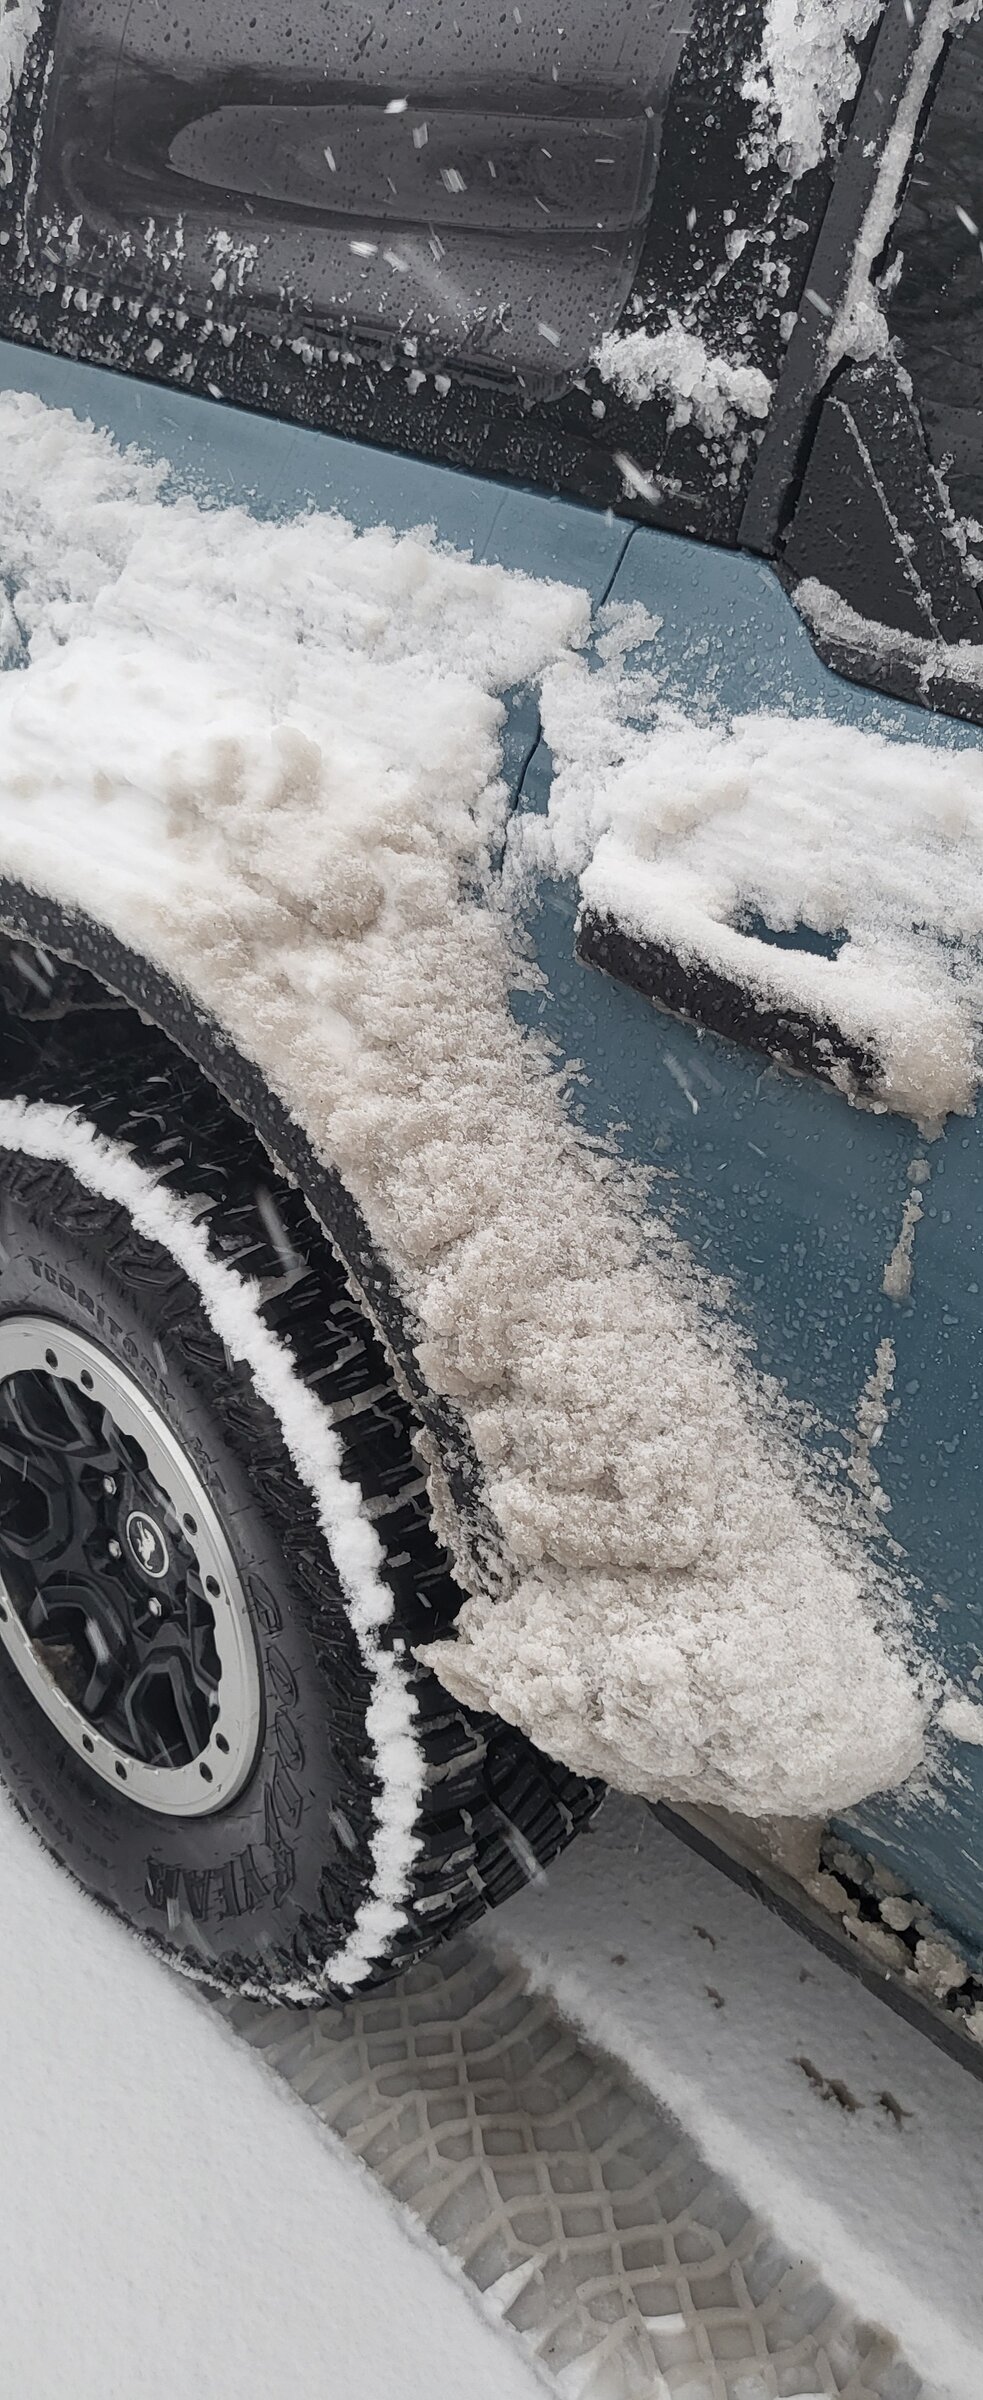 Ford Bronco Snow Pictures Please trim.68128D55-6220-4BCB-B71A-AE6A81BAD5D9.MOV